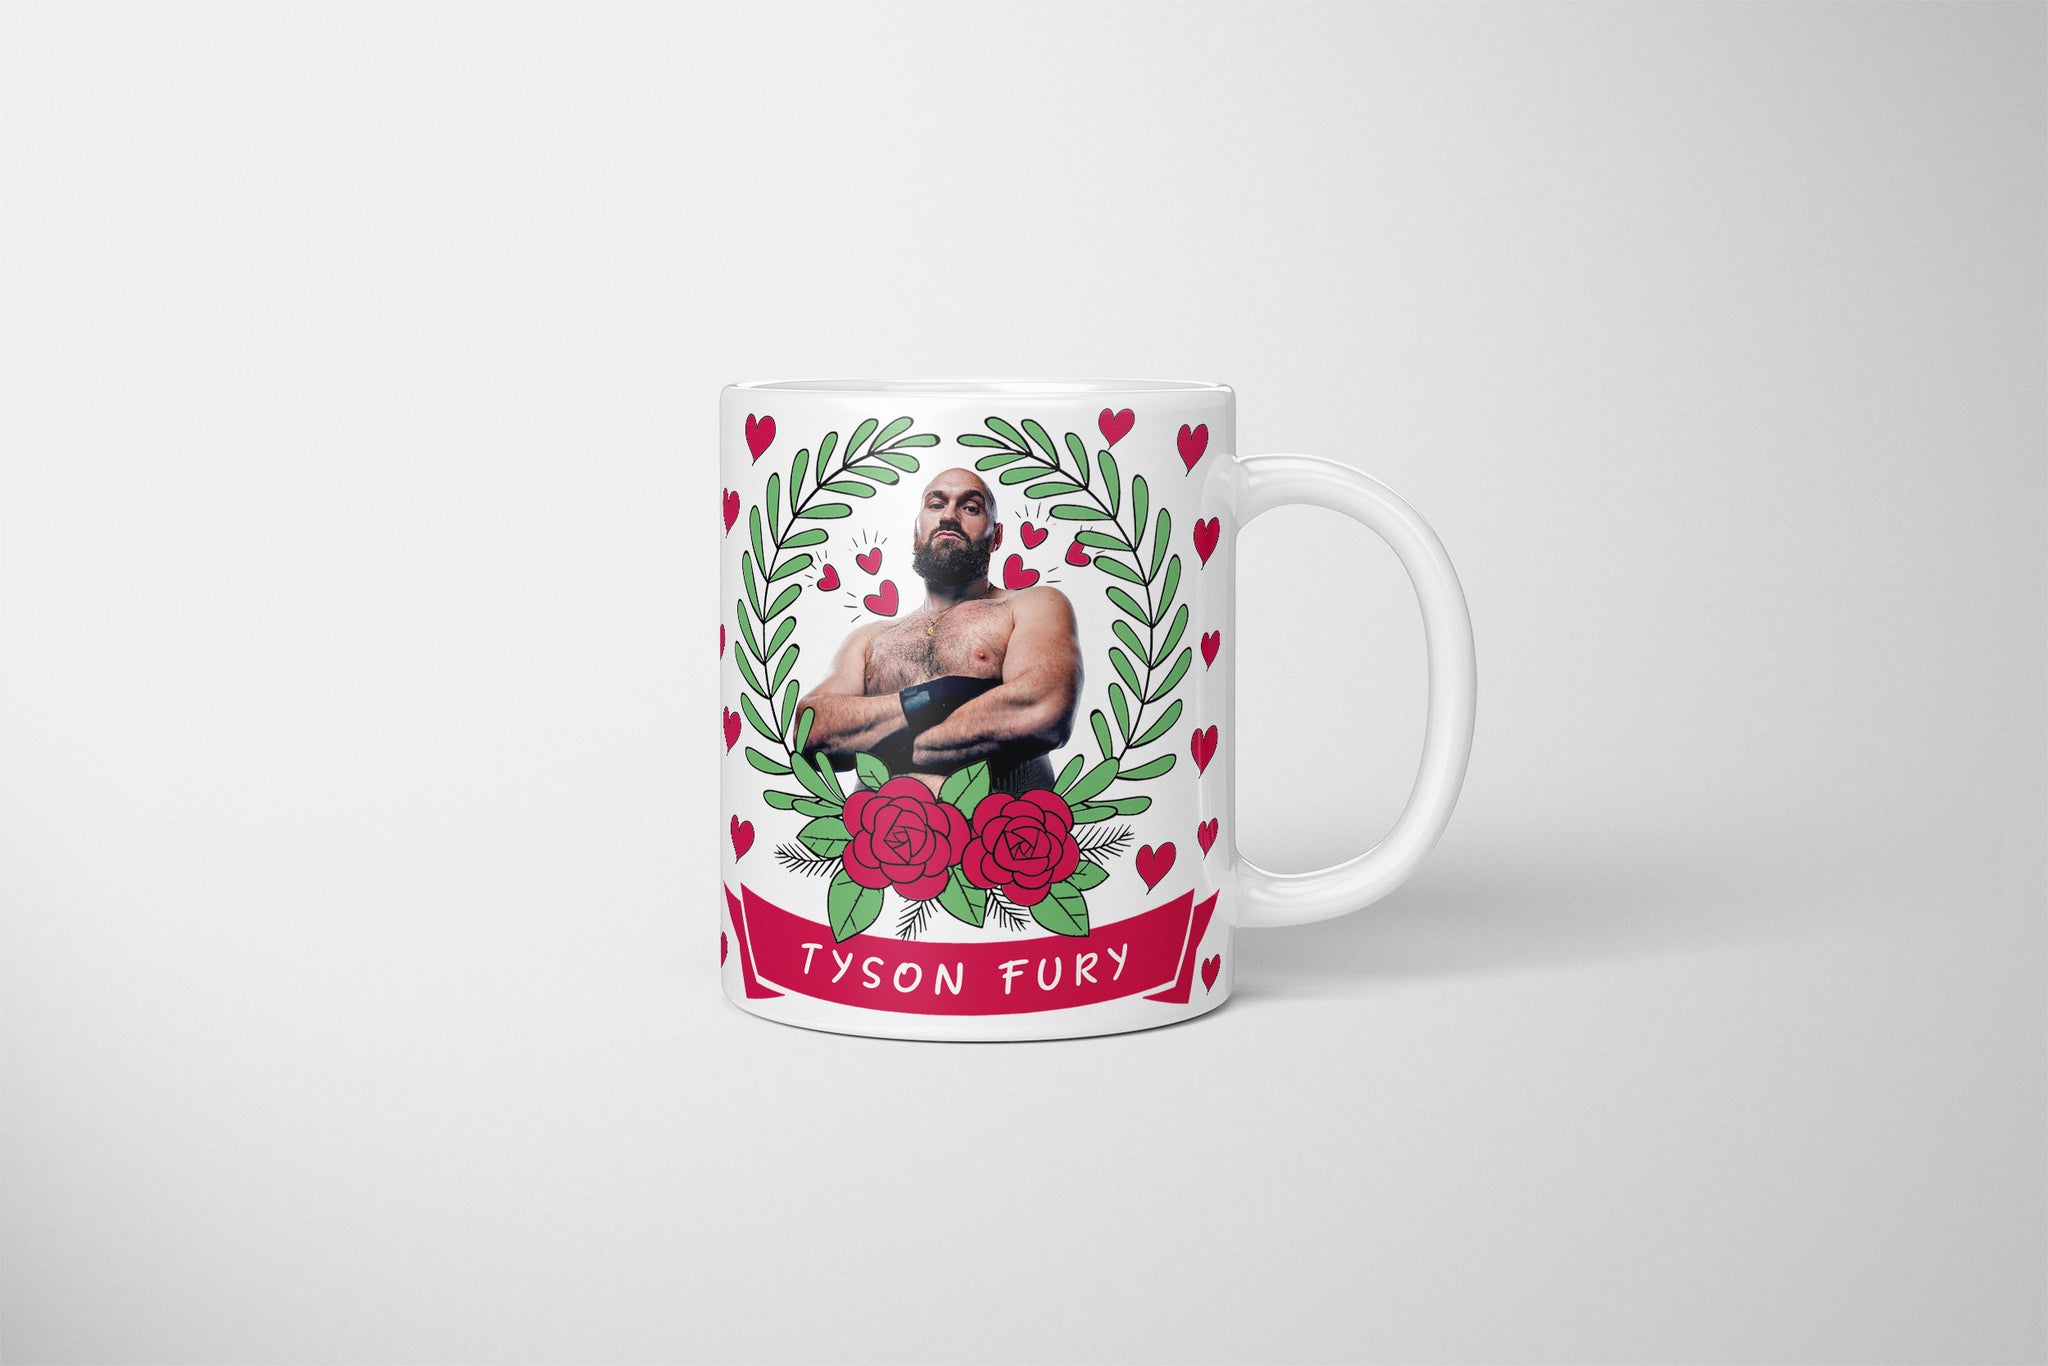 Tyson Fury Mug, Tyson Fury Love Hearts, Cute, Tyson Fury Novelty Mug, Comedy Mug, Tyson Fury, Boxing, Boxing Mug, Tyson Fury Boxer